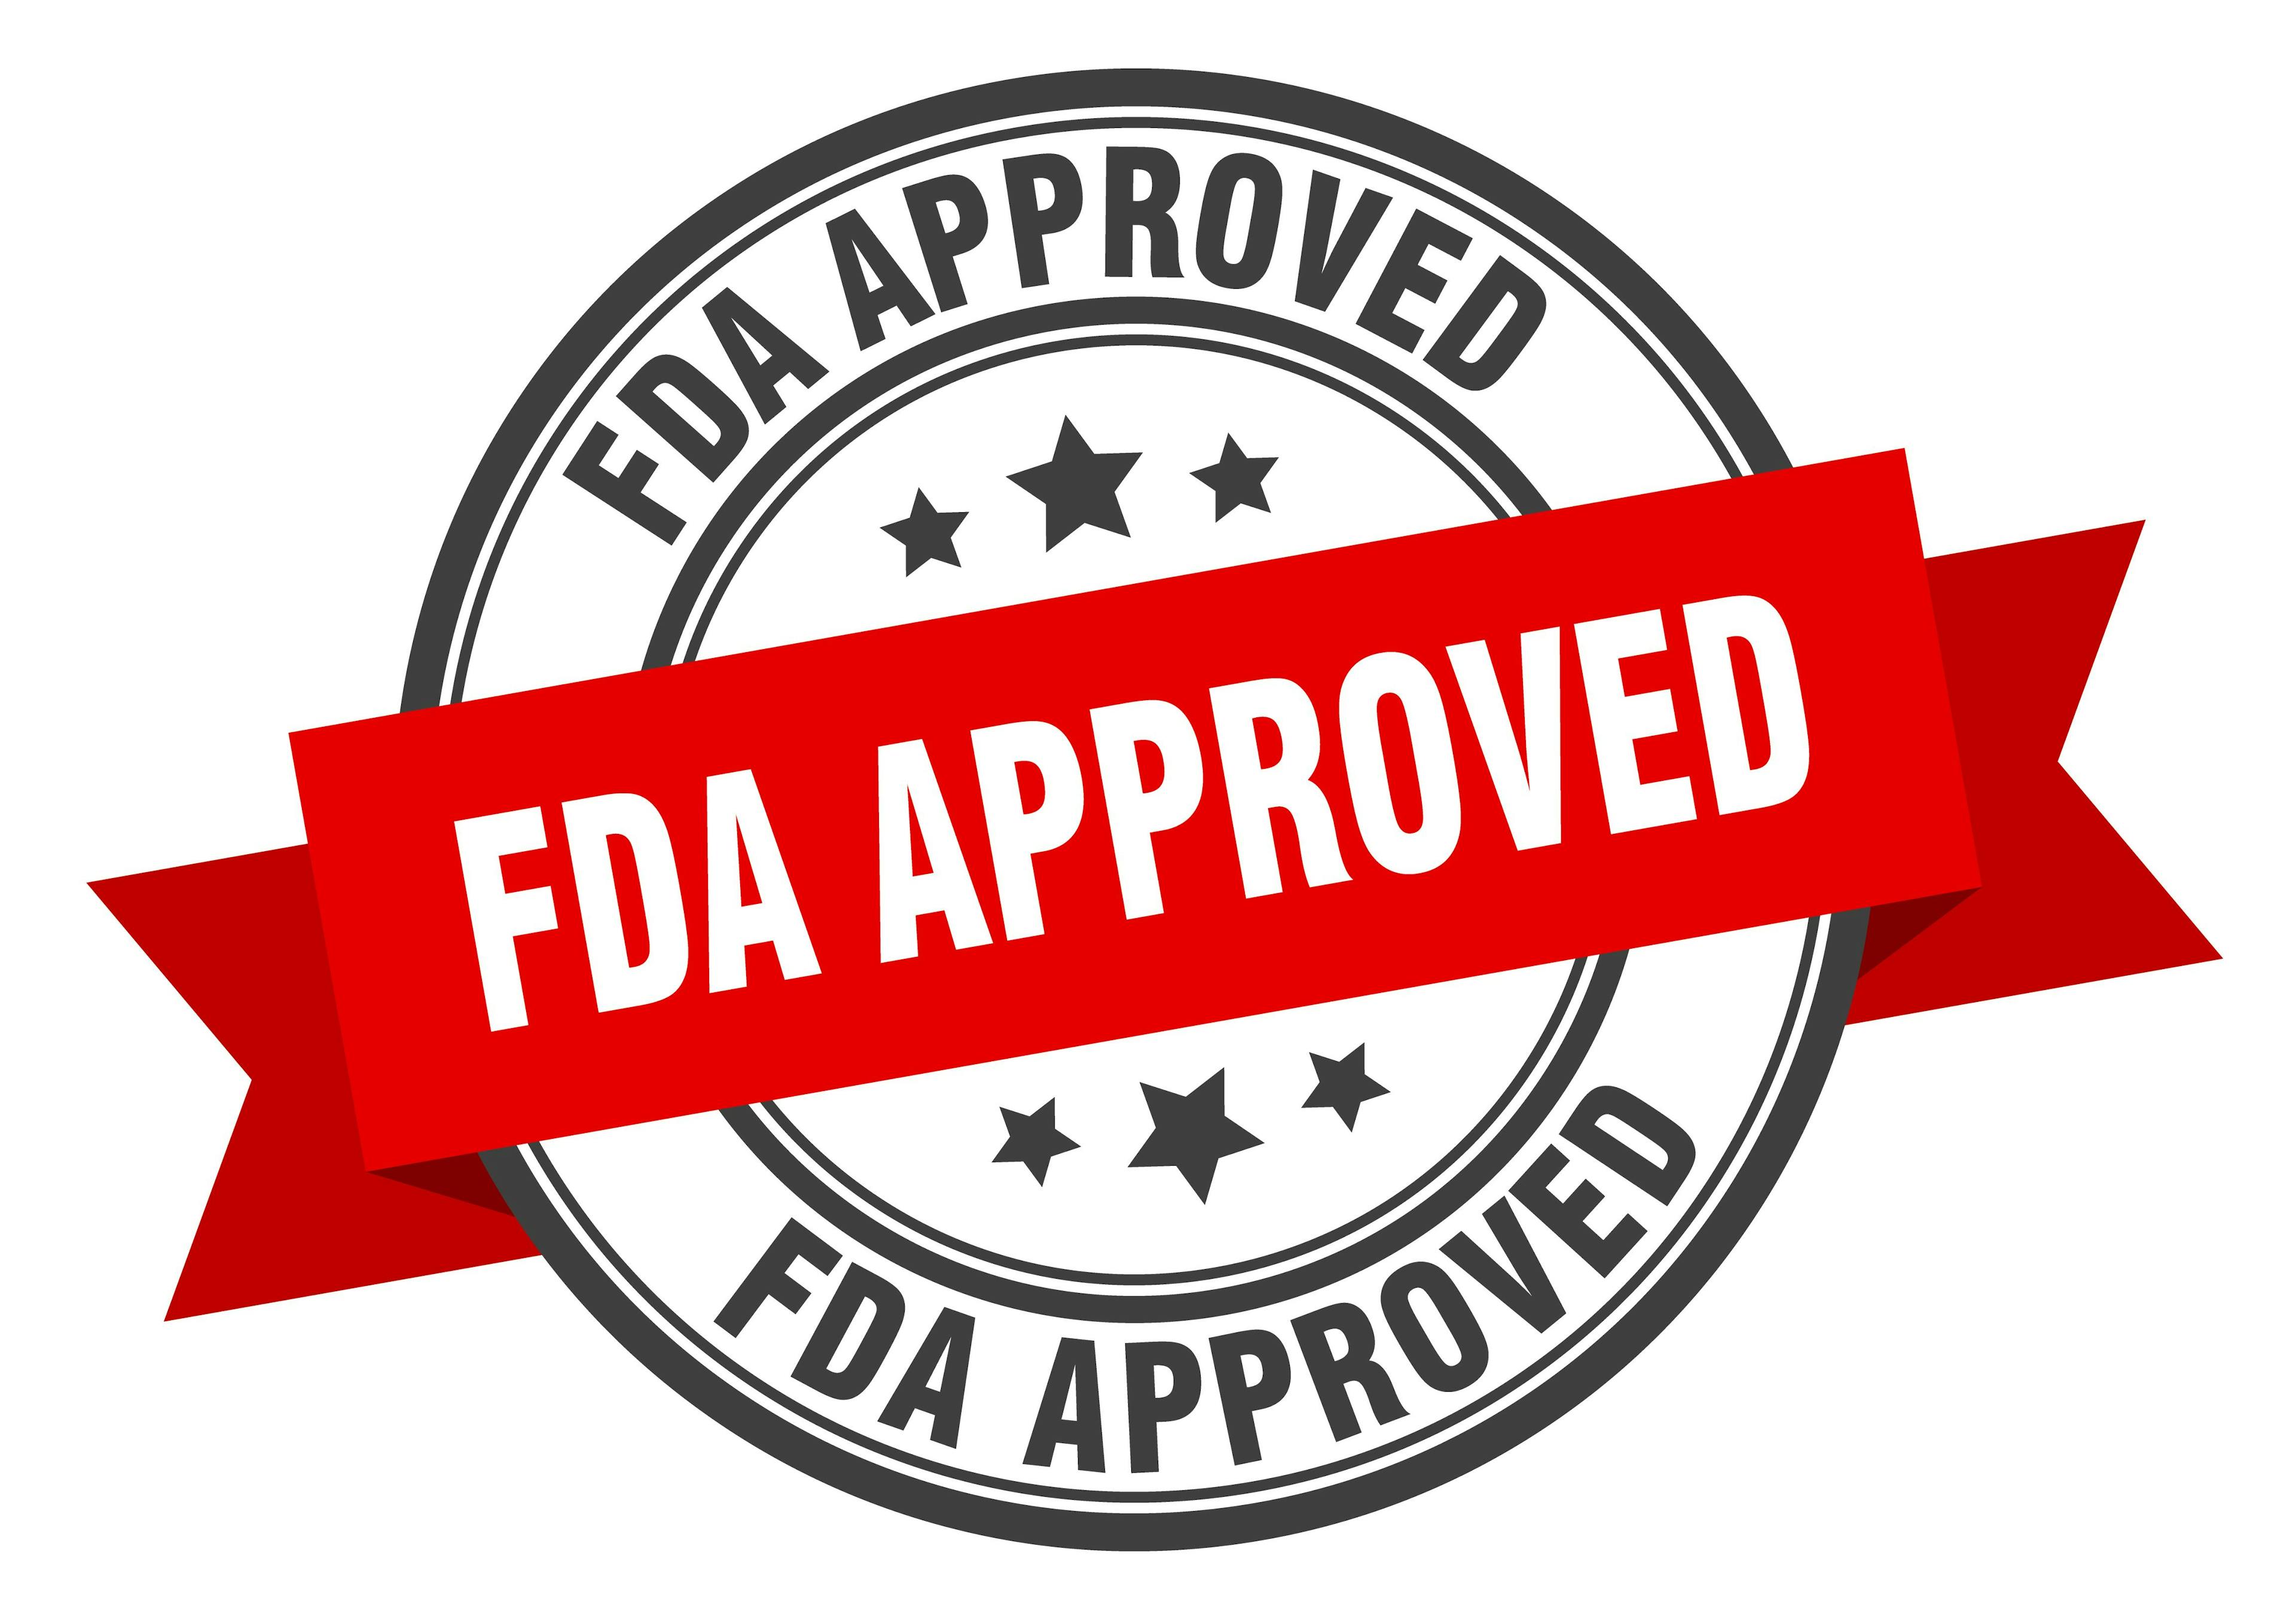 FDA approved | Image credit: Aquir – stock.adobe.com